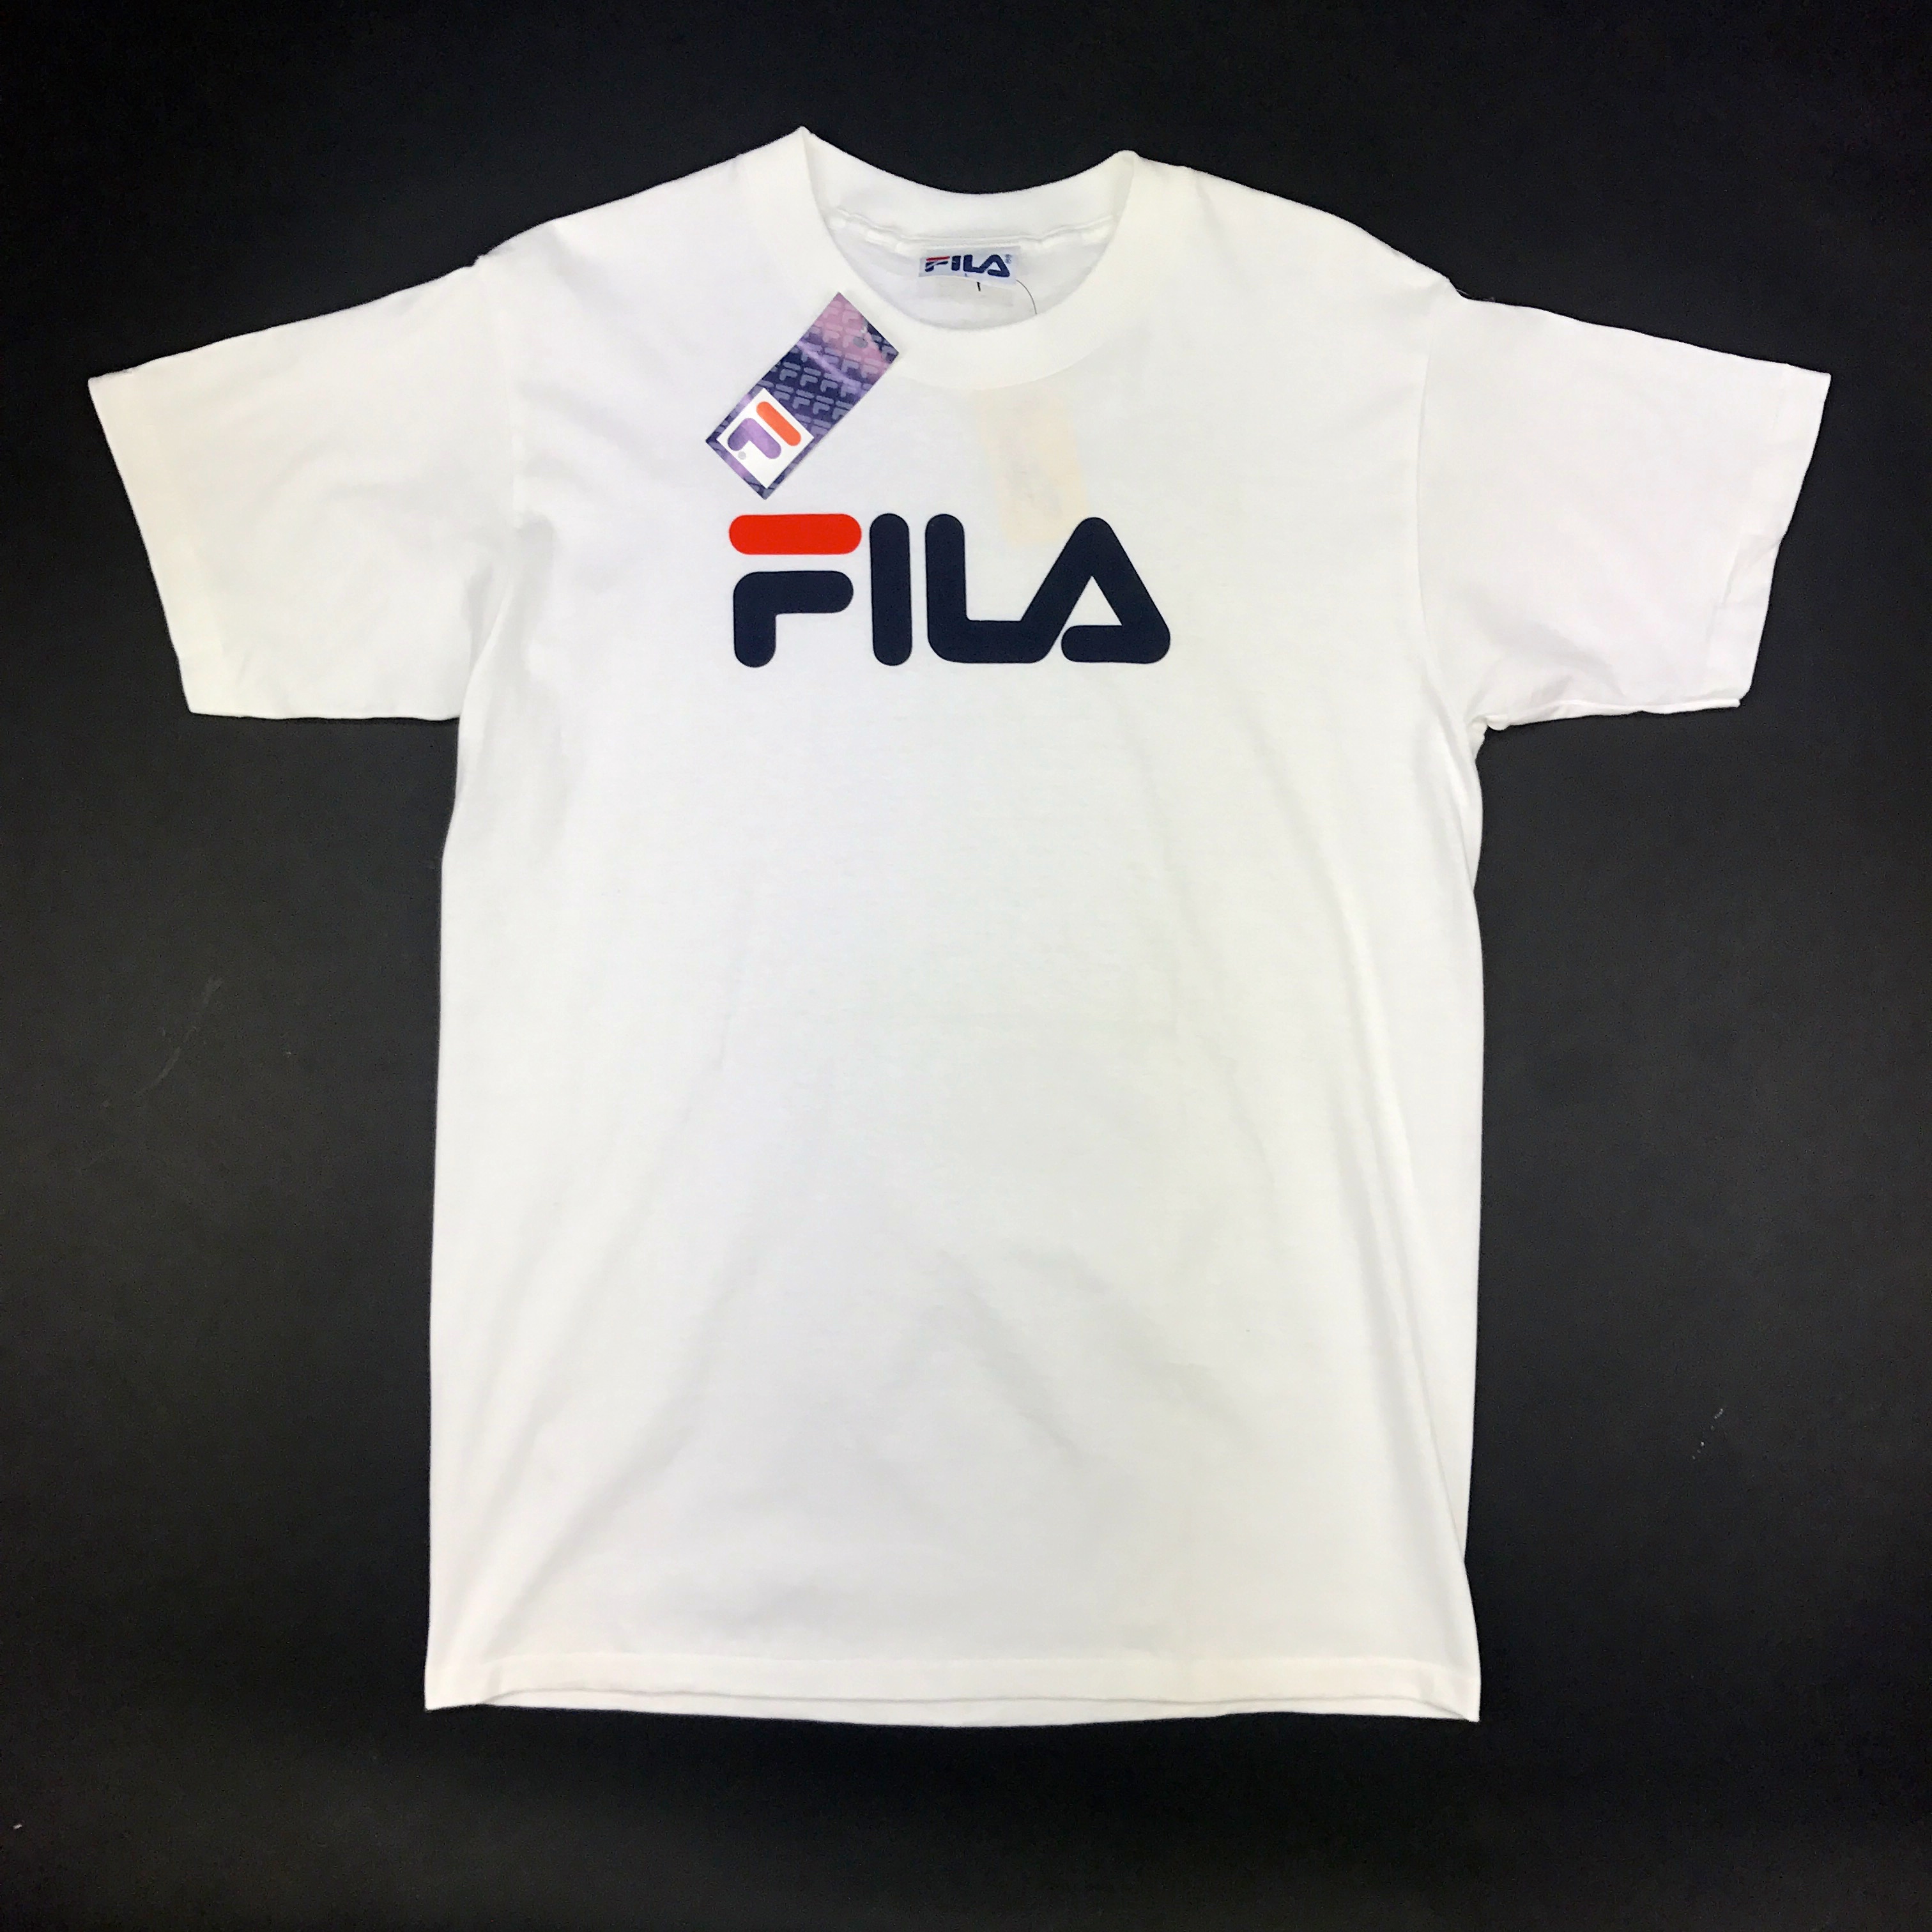 Fila Shirts vintage fila t shirt - classic collection JMOTCSR